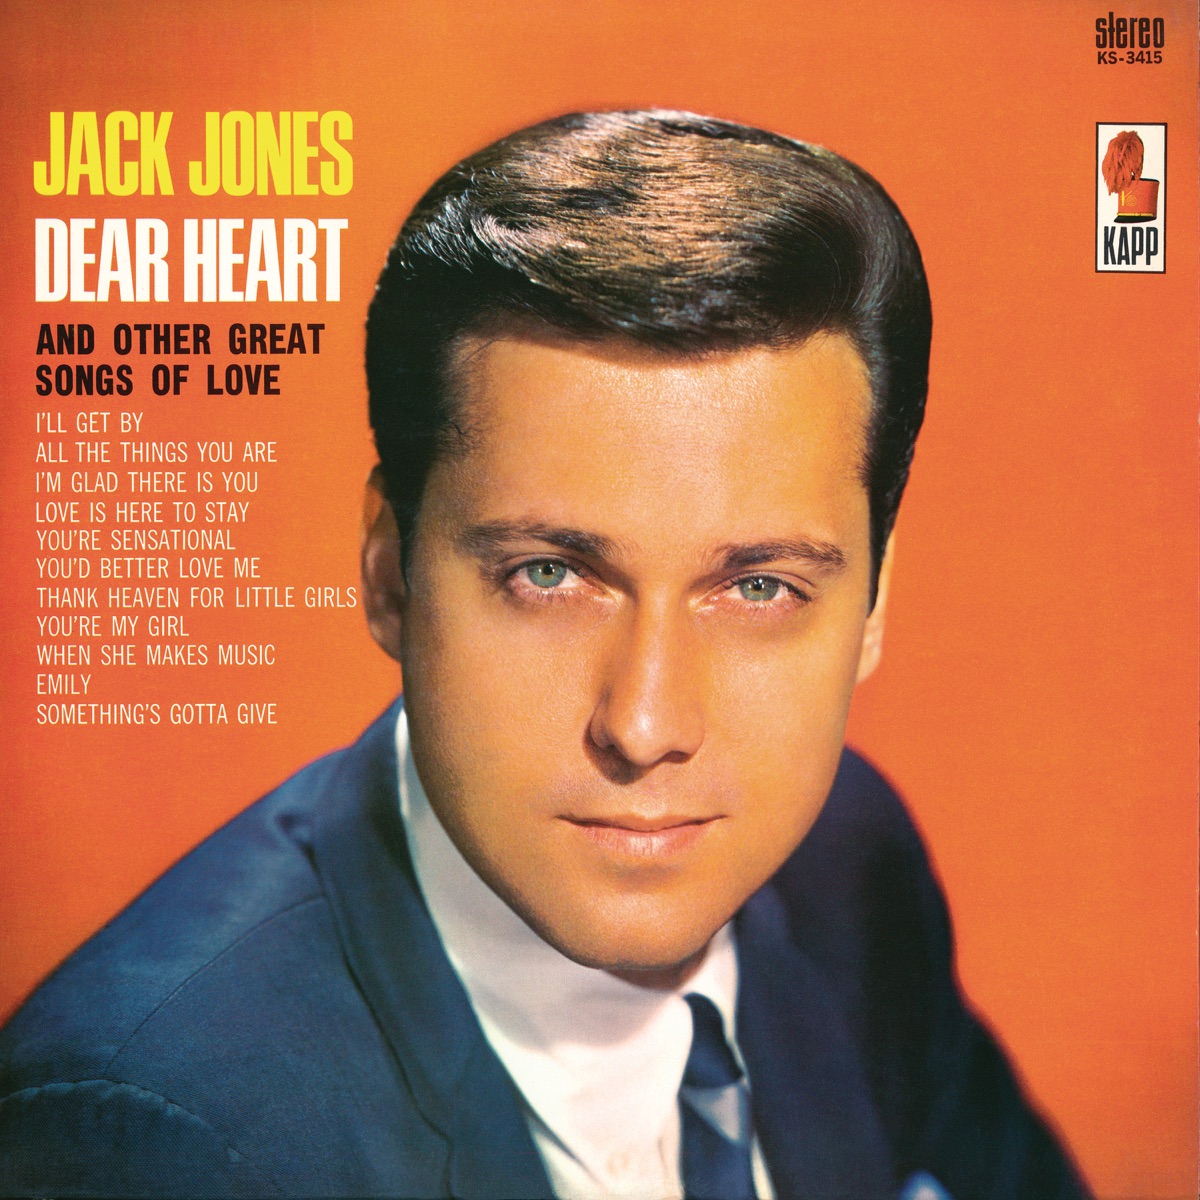 Greatest Hits: Jack Jones - Album by Jack Jones - Apple Music